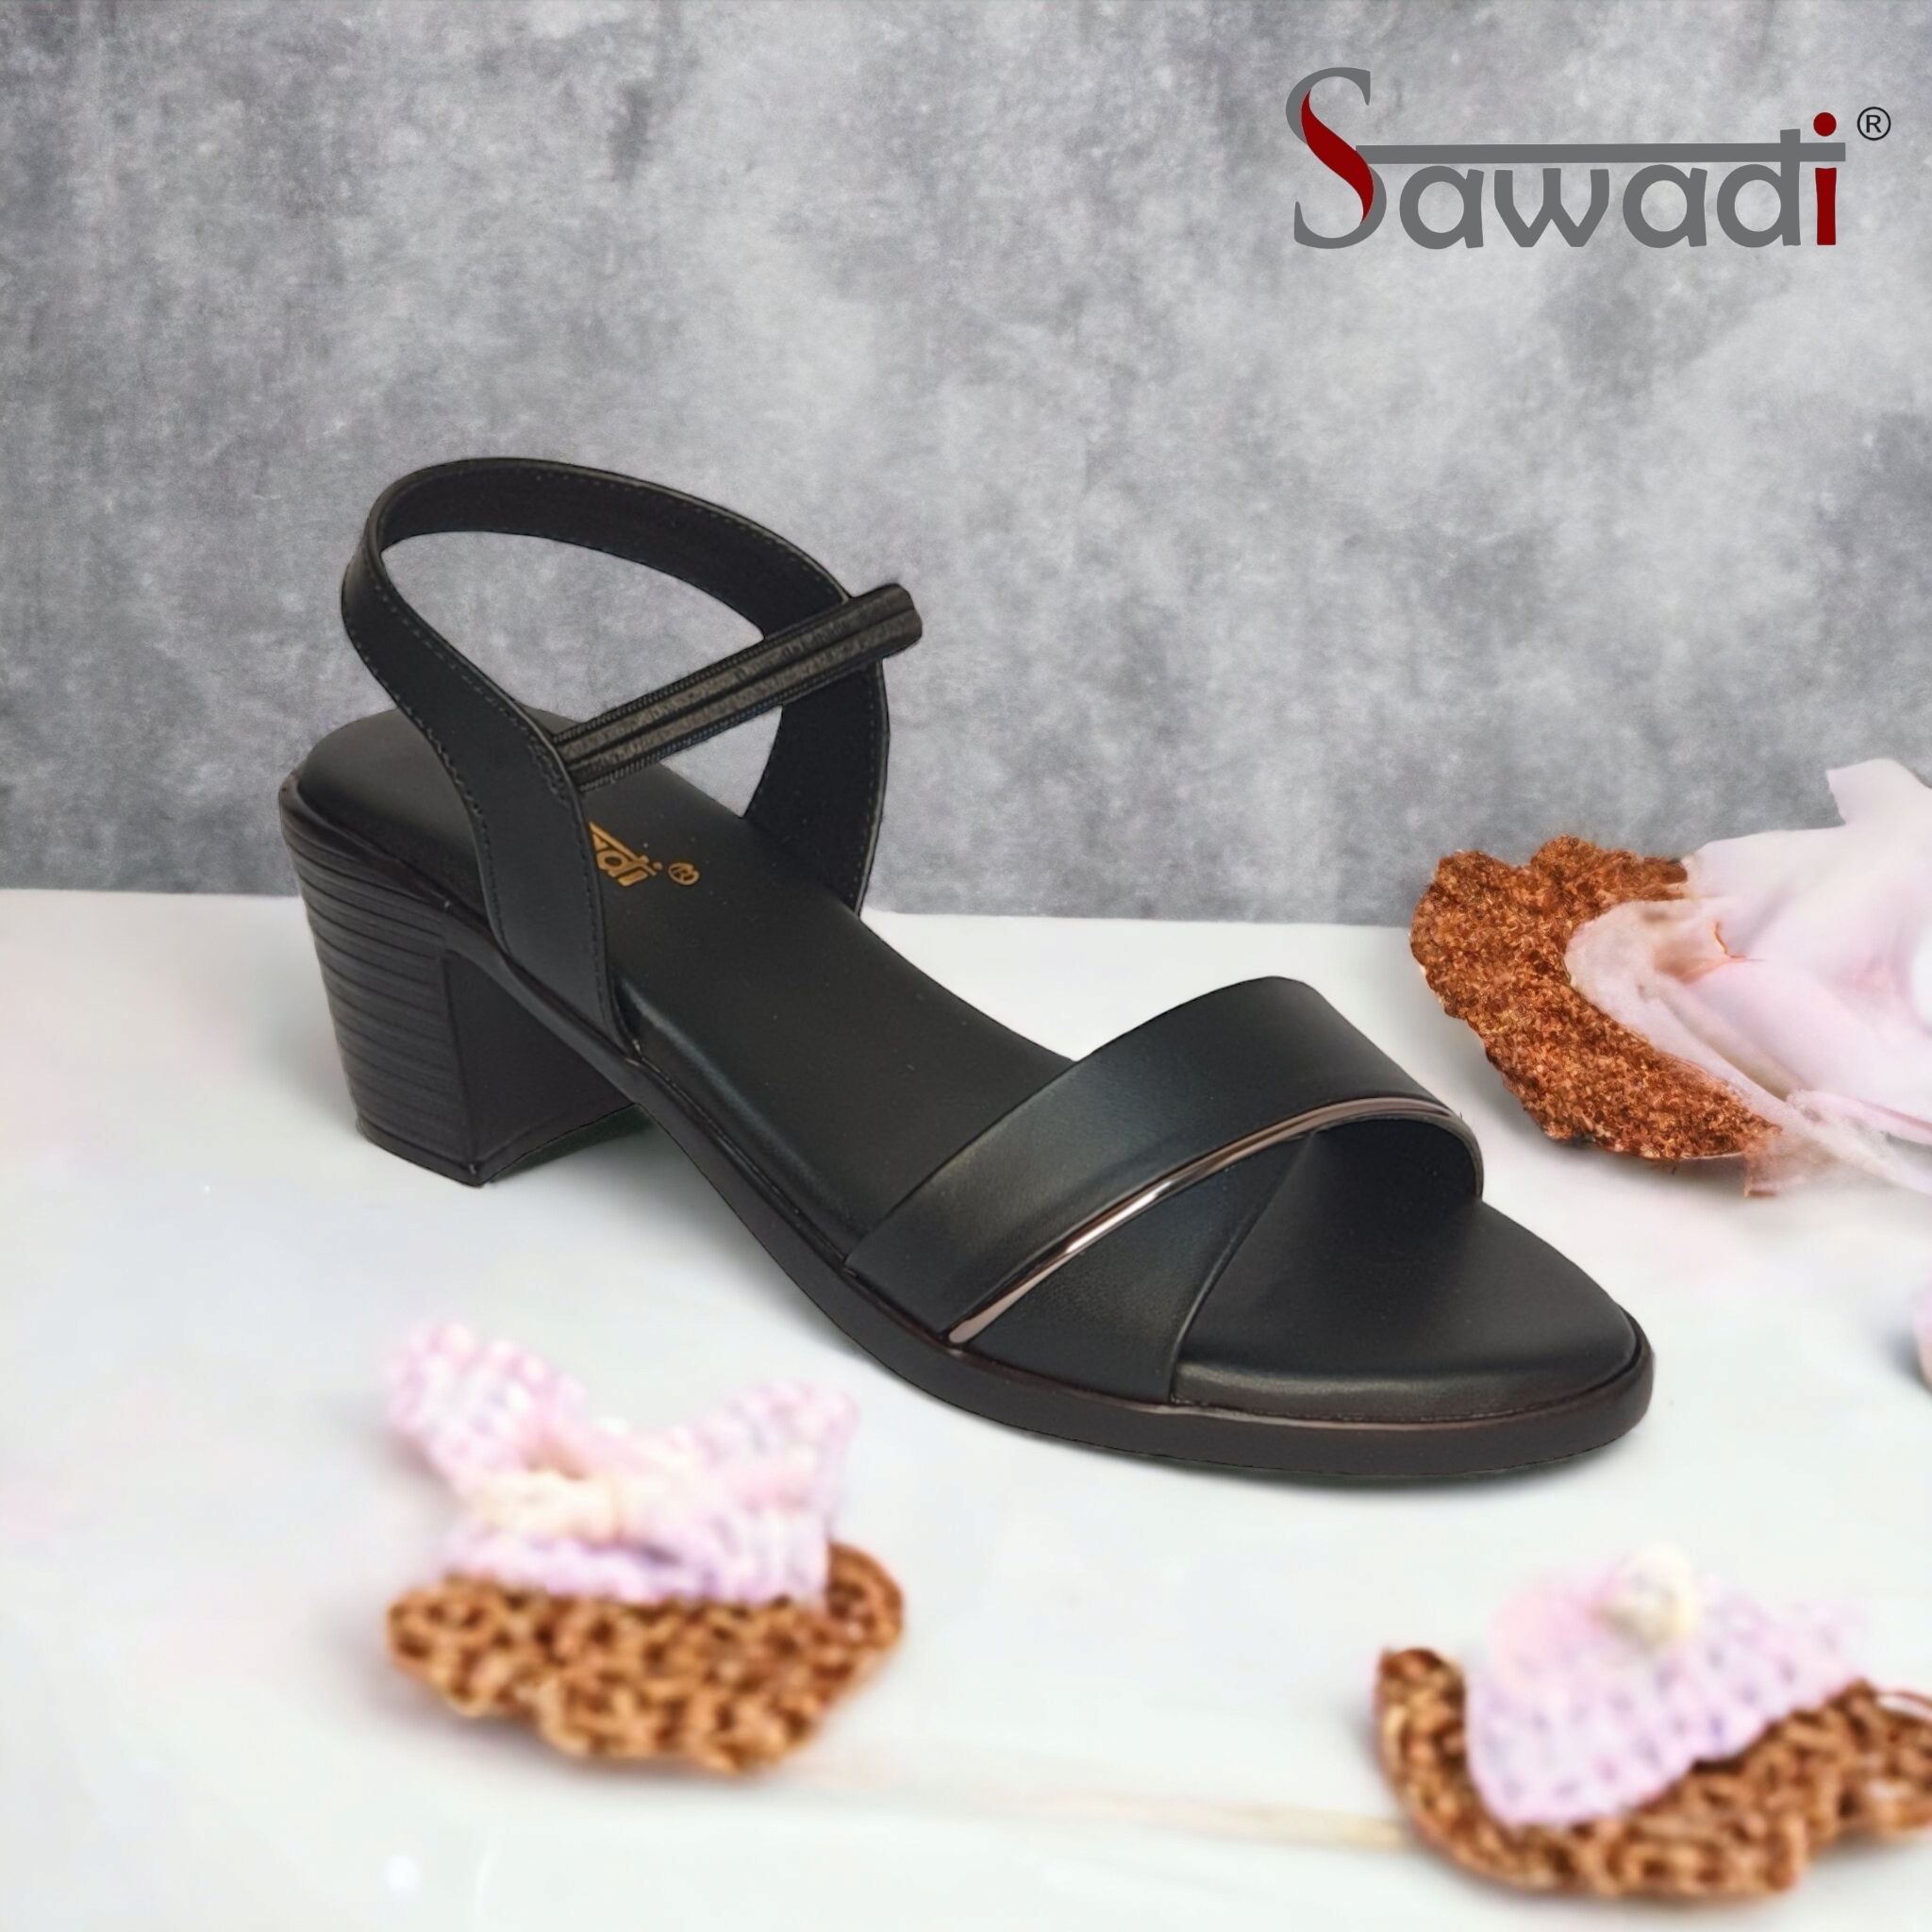 Sawadi Women Heel sandals